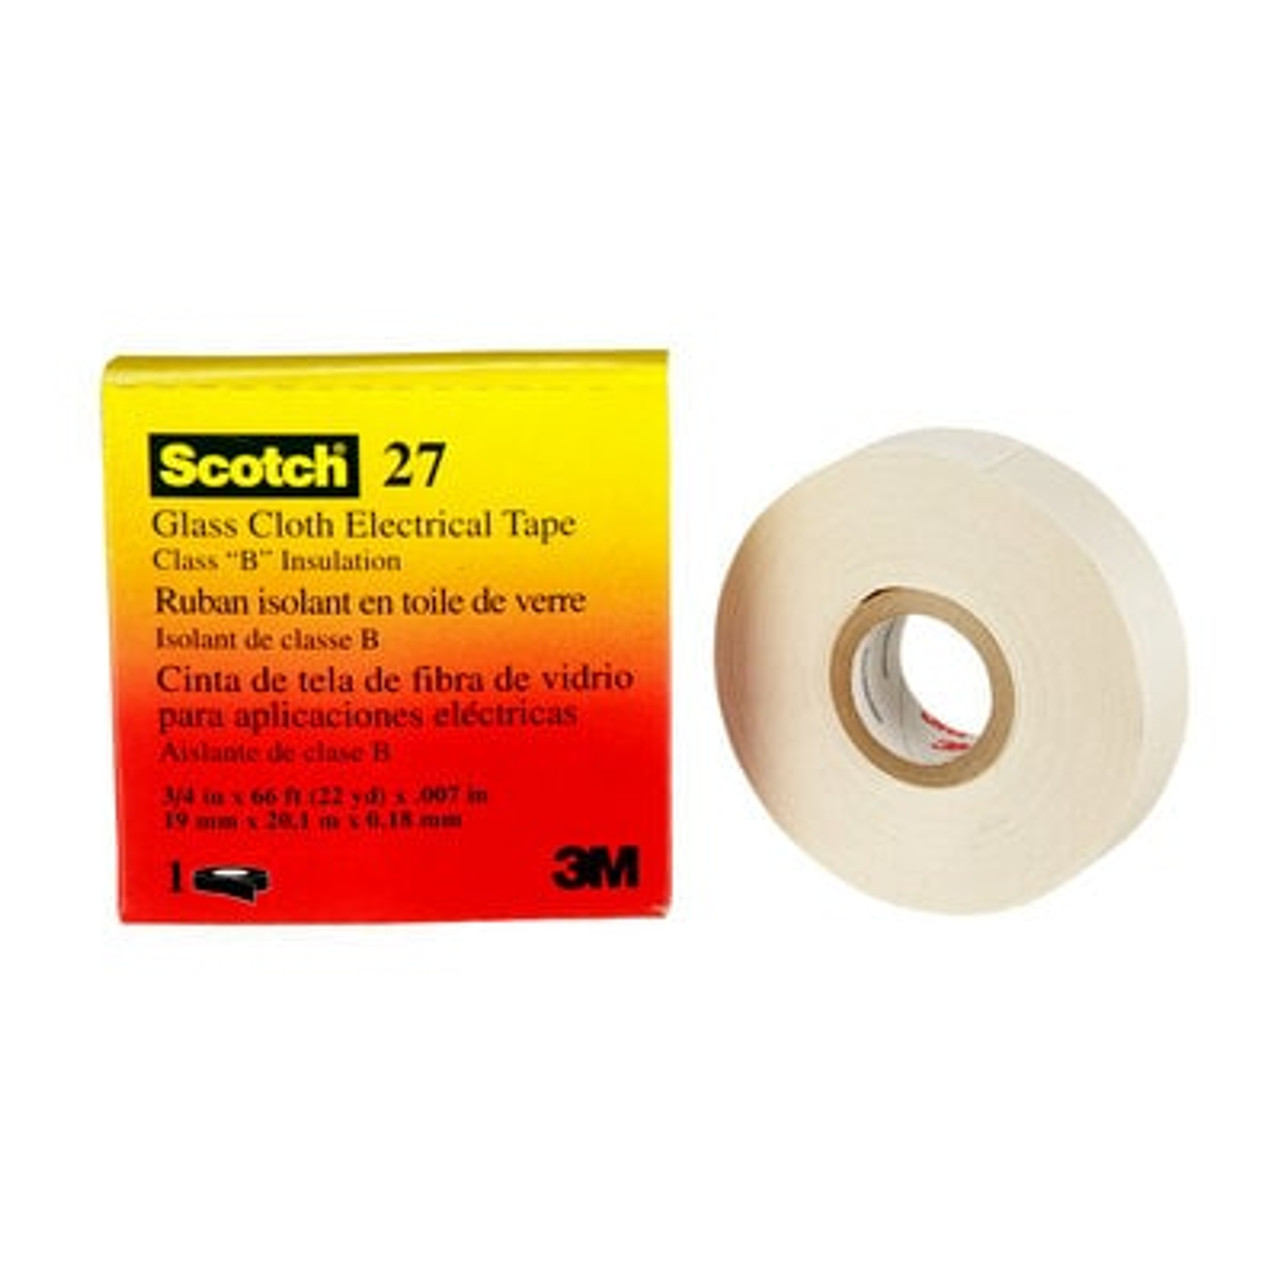 3M™ Scotch® Glass Cloth Electrical Tape 27, Roll